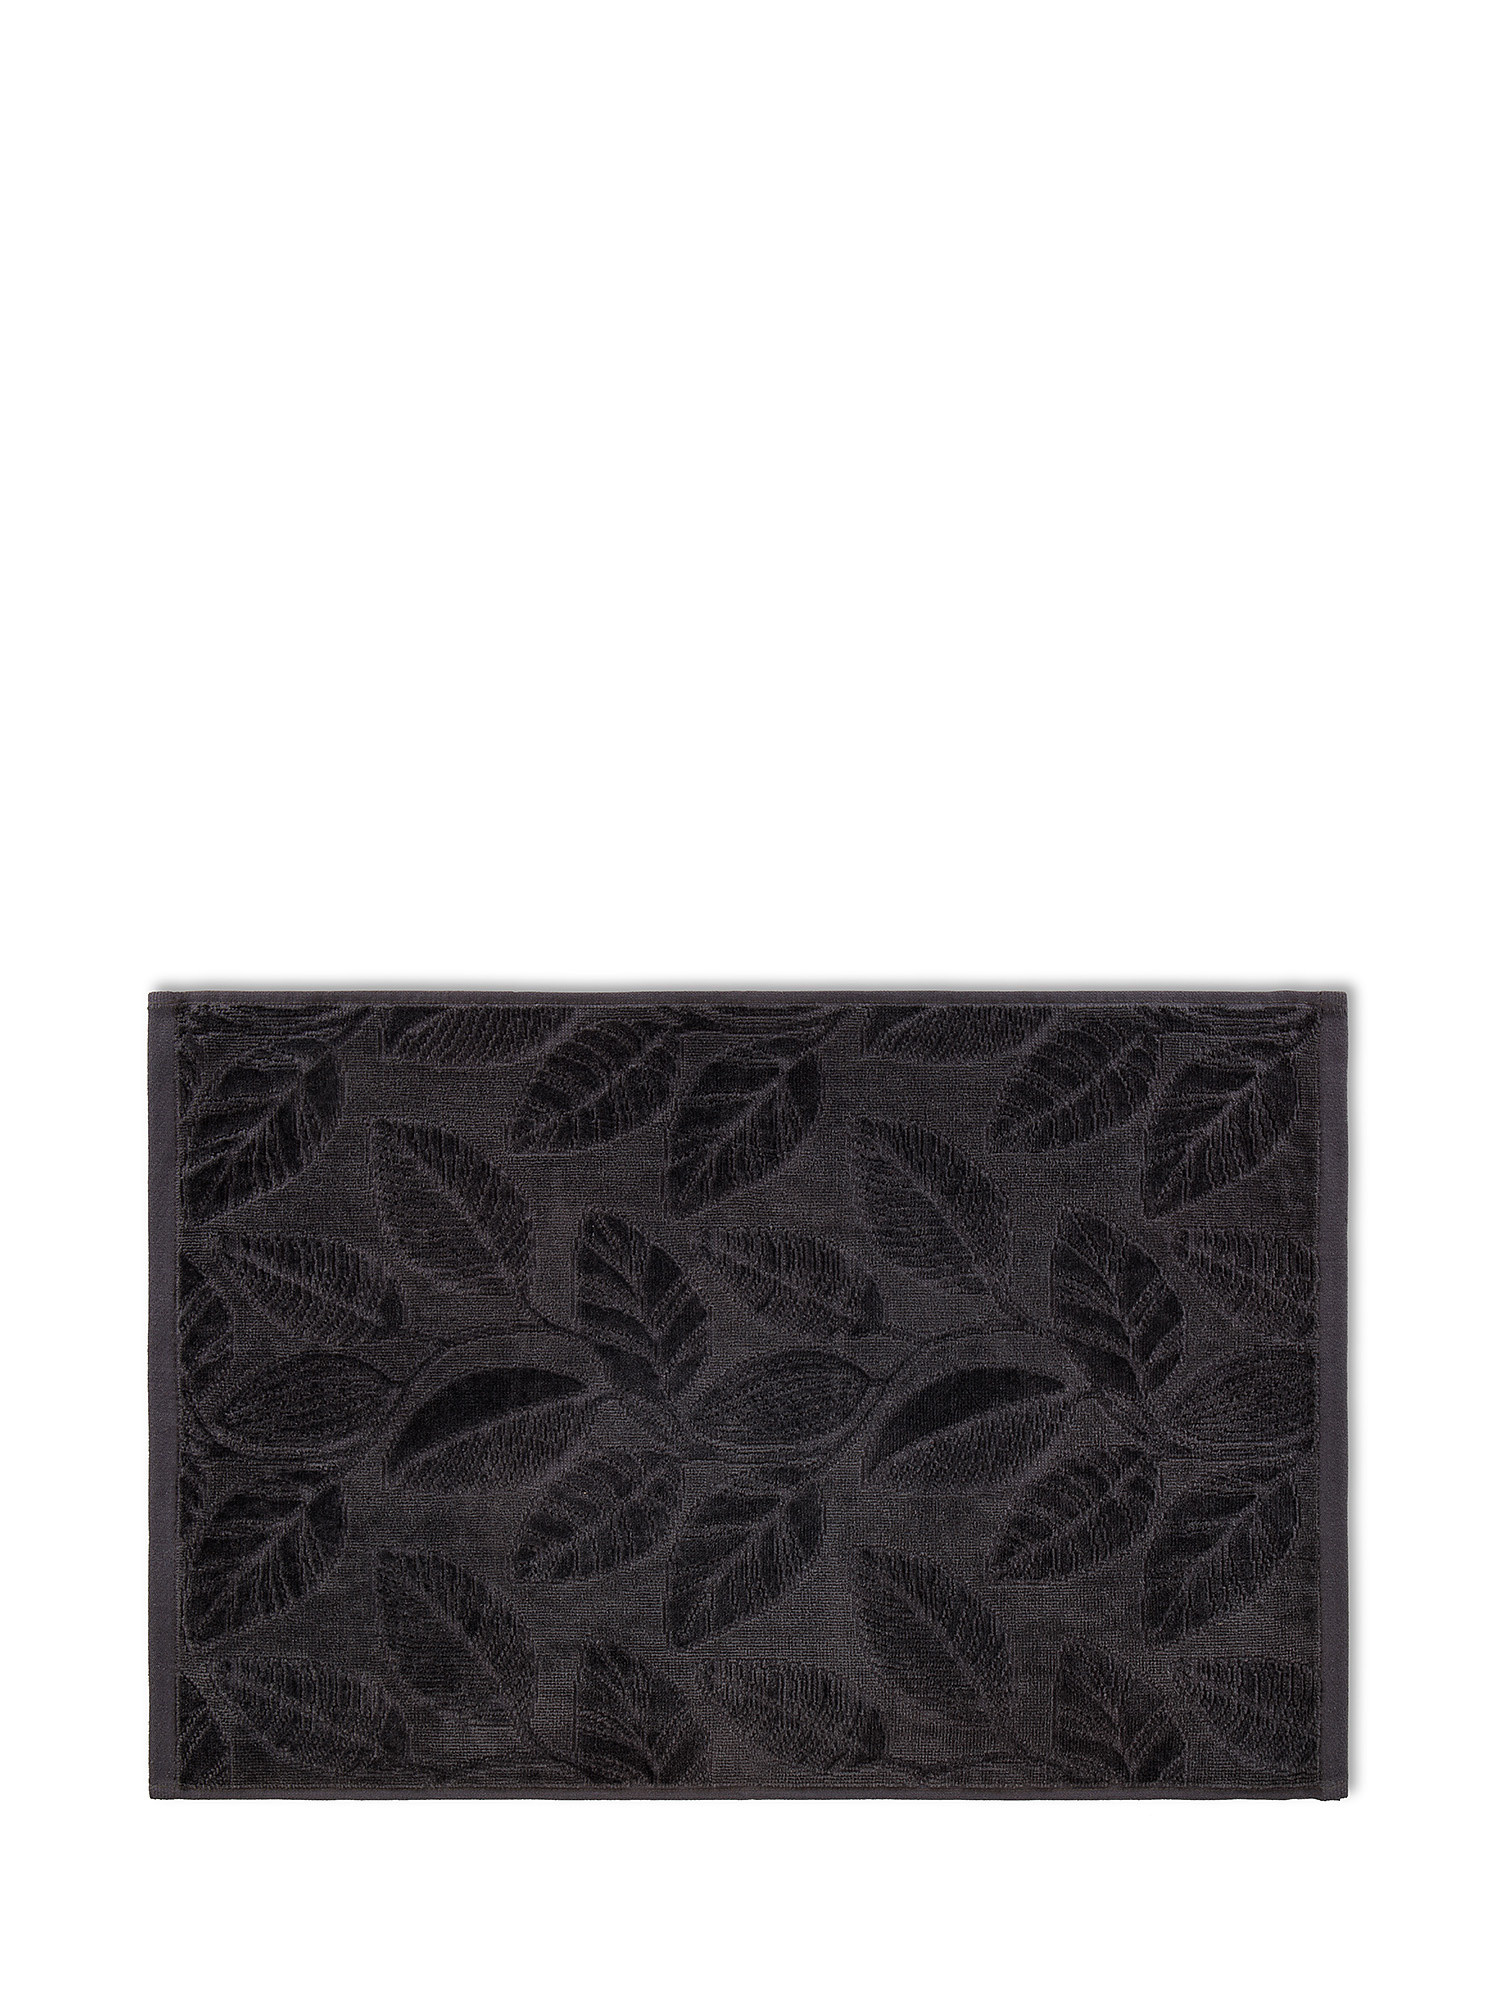 Cotton velor towel with flower motif, Grey, large image number 1